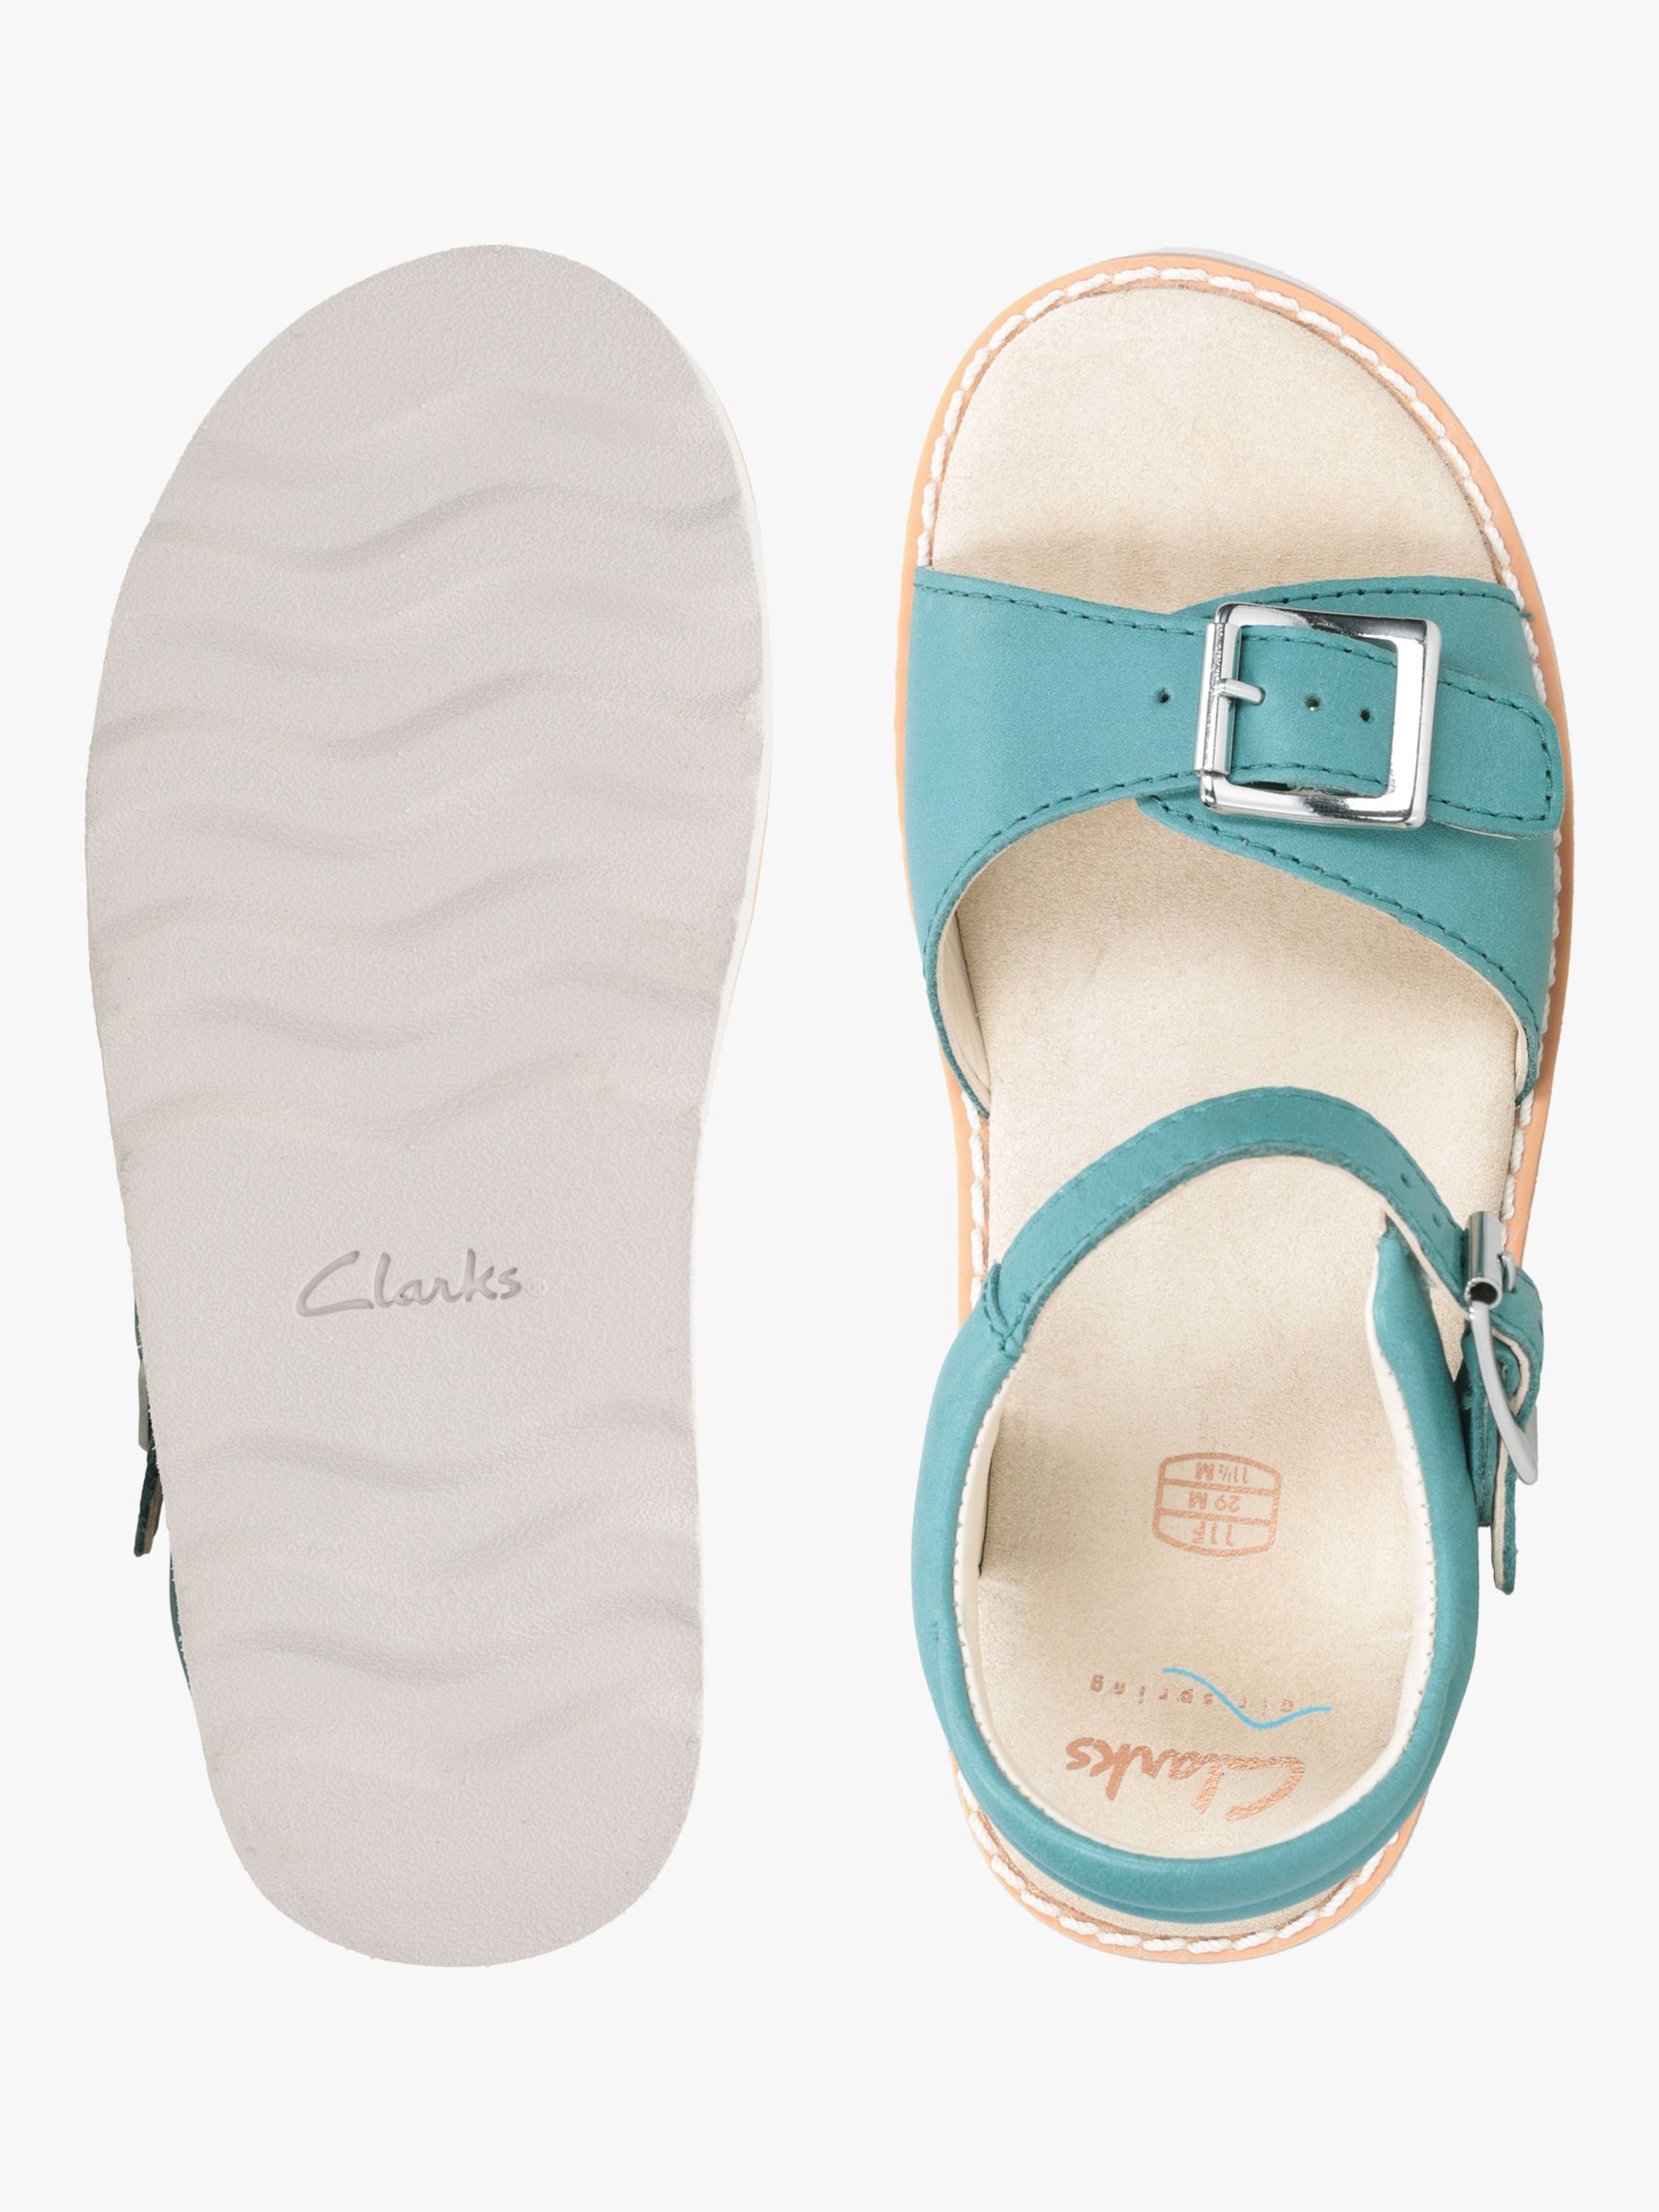 clarks crown bloom sandals